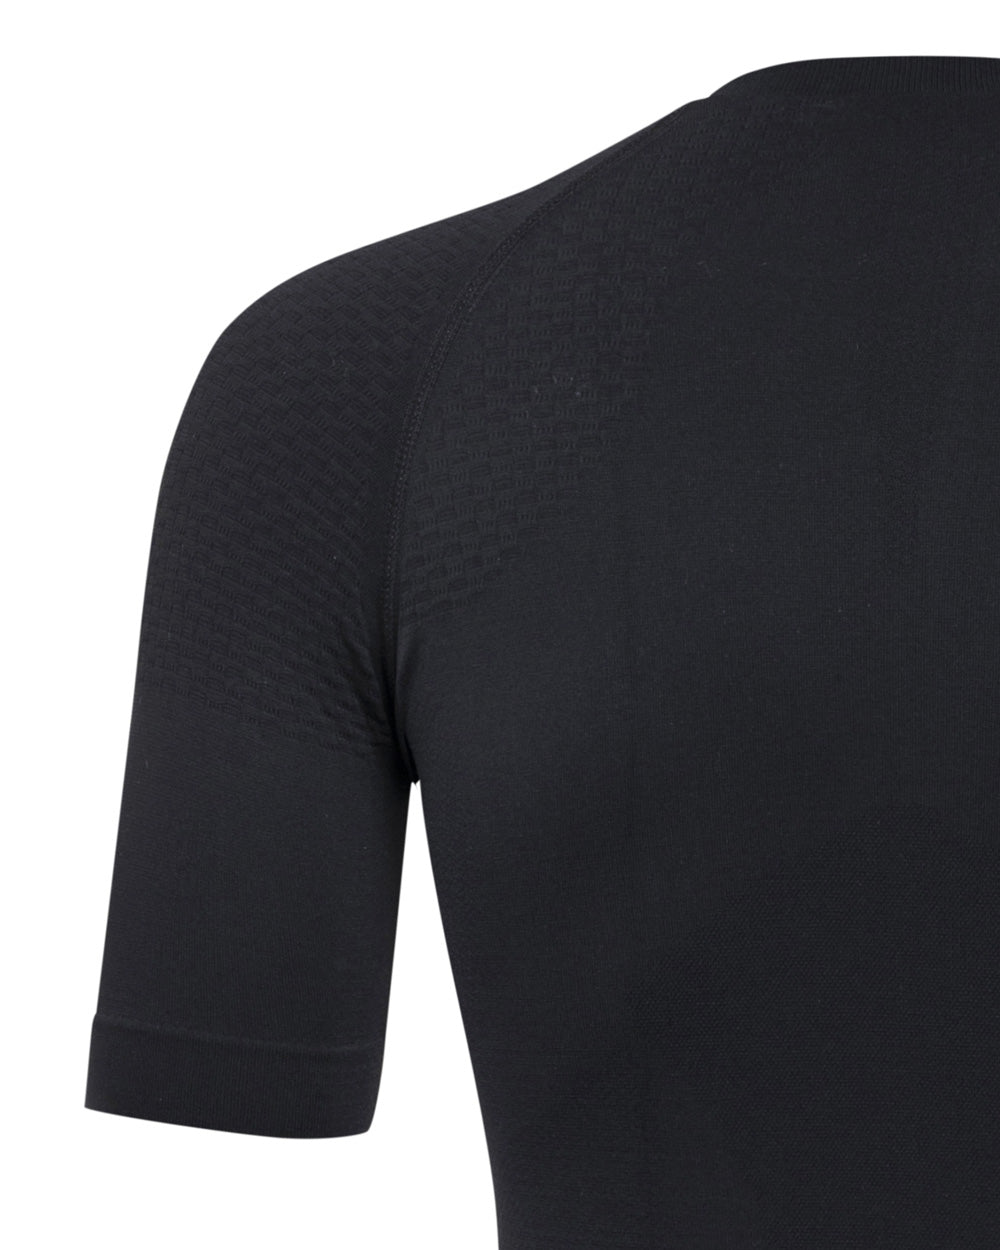 T-shirt FIR lady short sleeves - Black - Medical Device triloxy